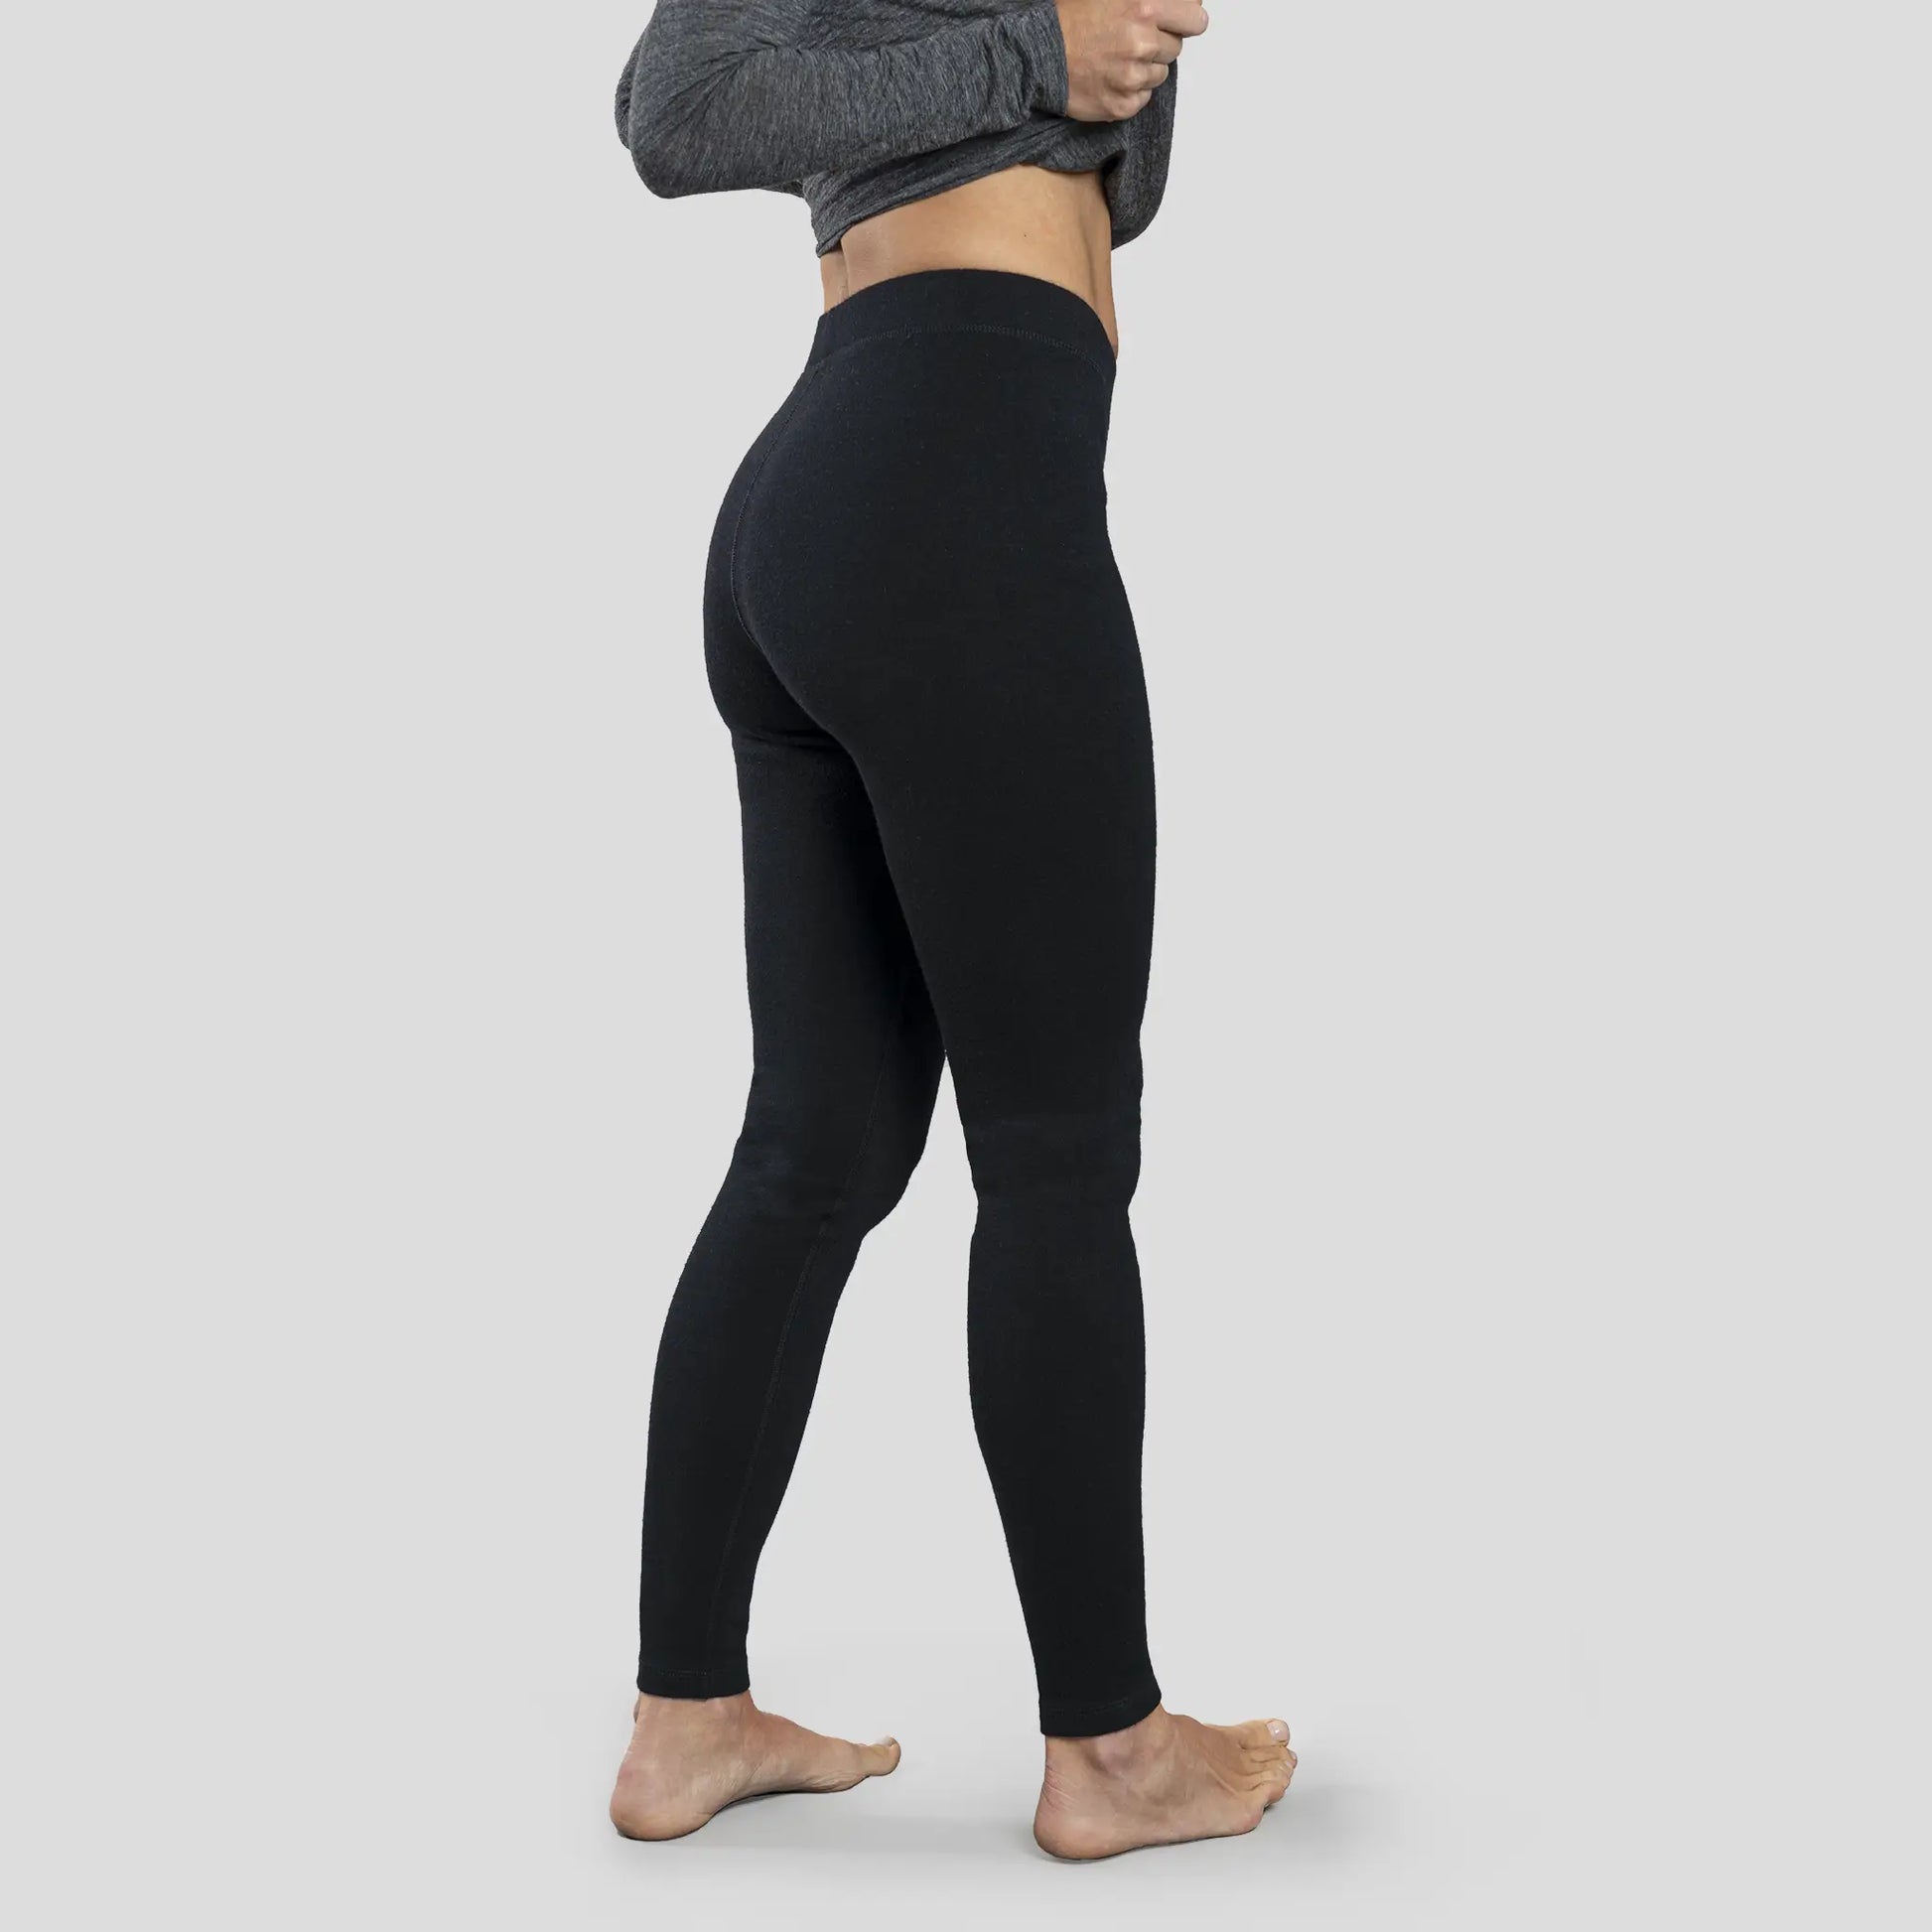 womens active comfort leggings lightweight color black